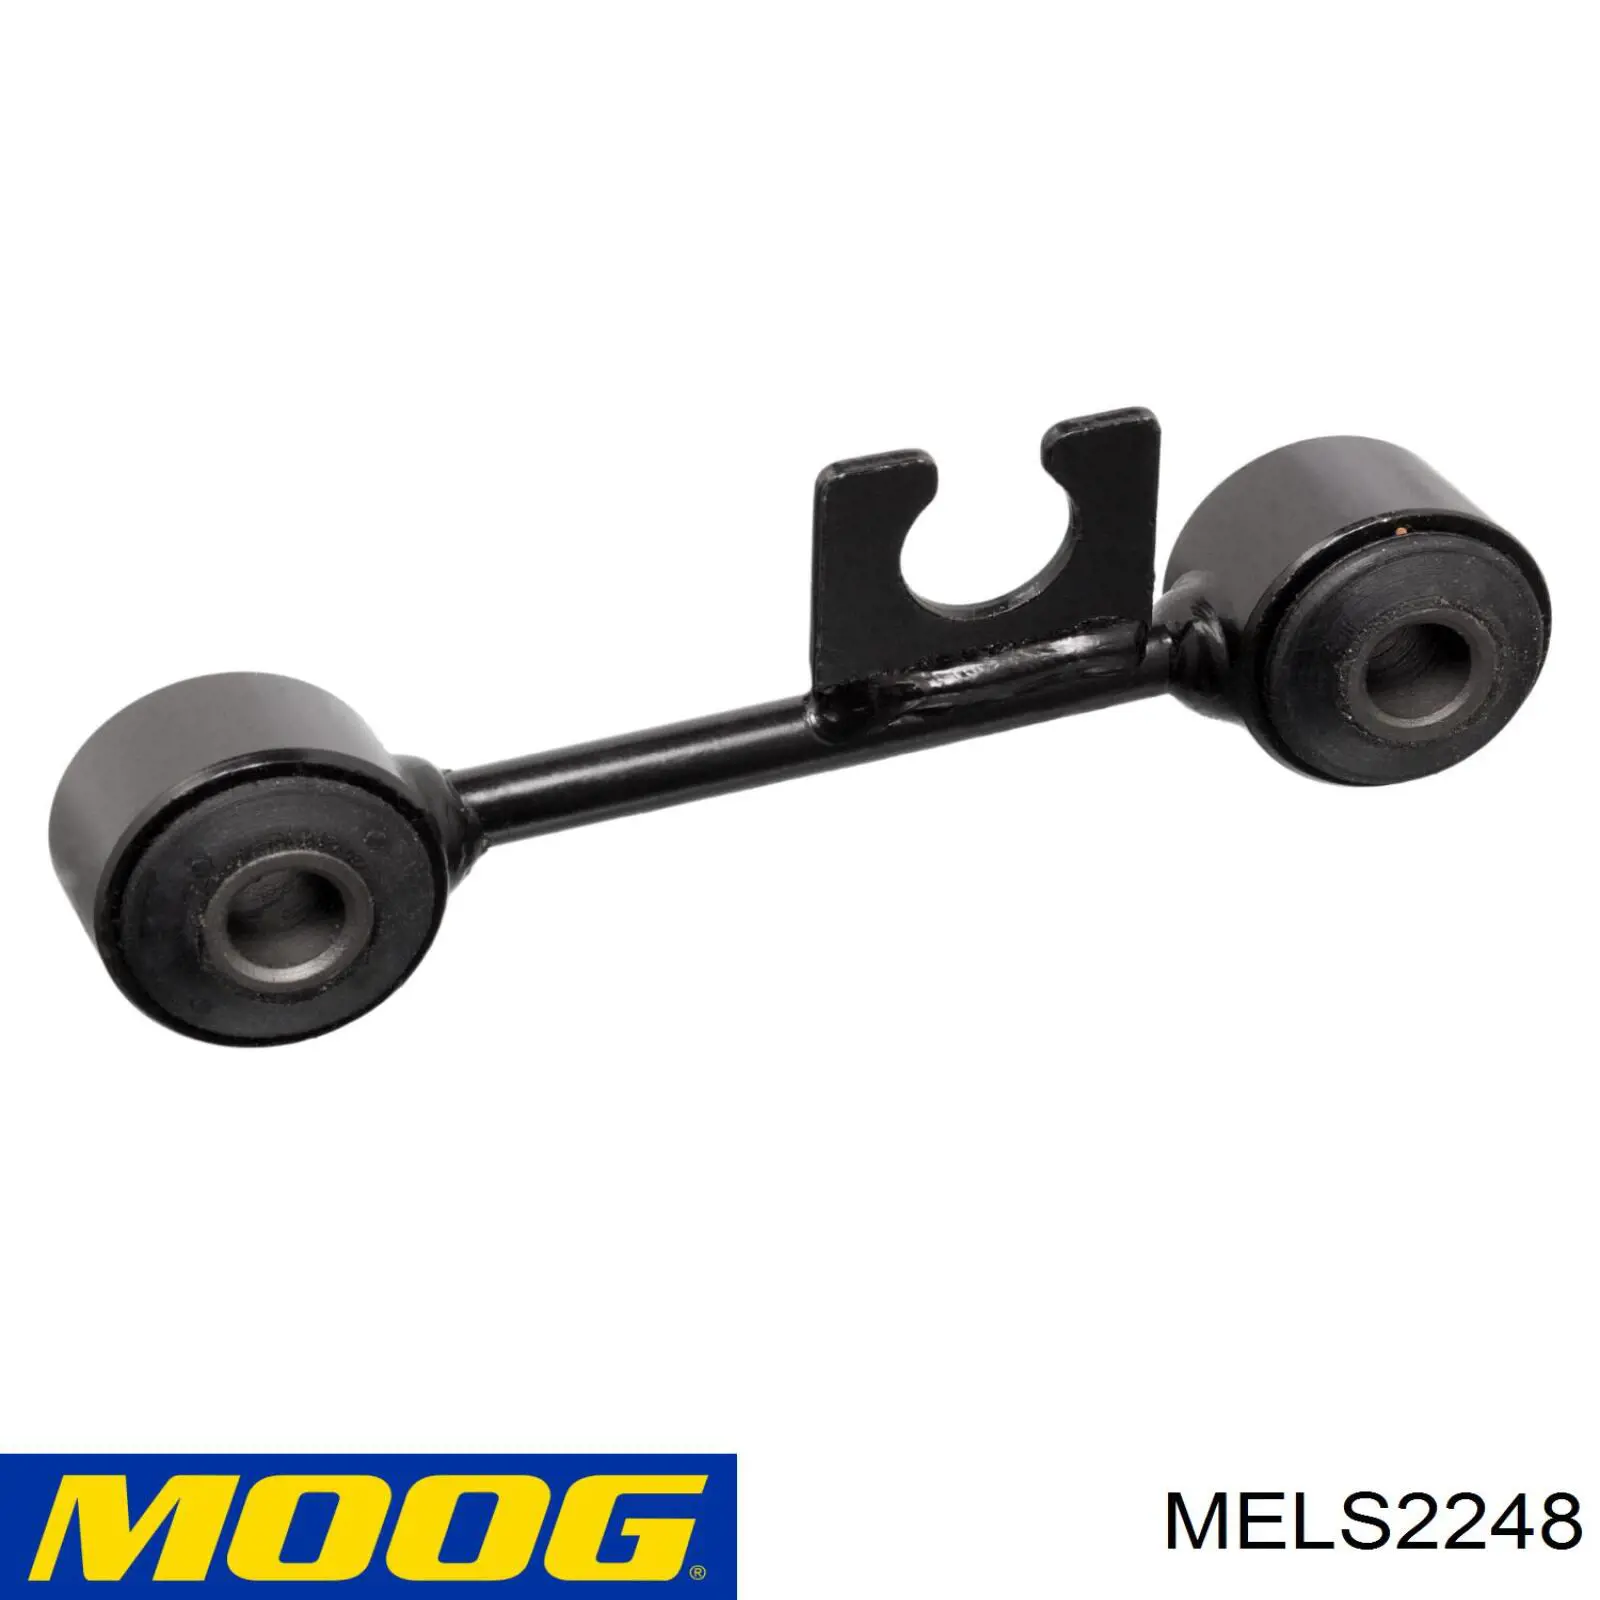 MELS2248 Moog soporte de barra estabilizadora trasera